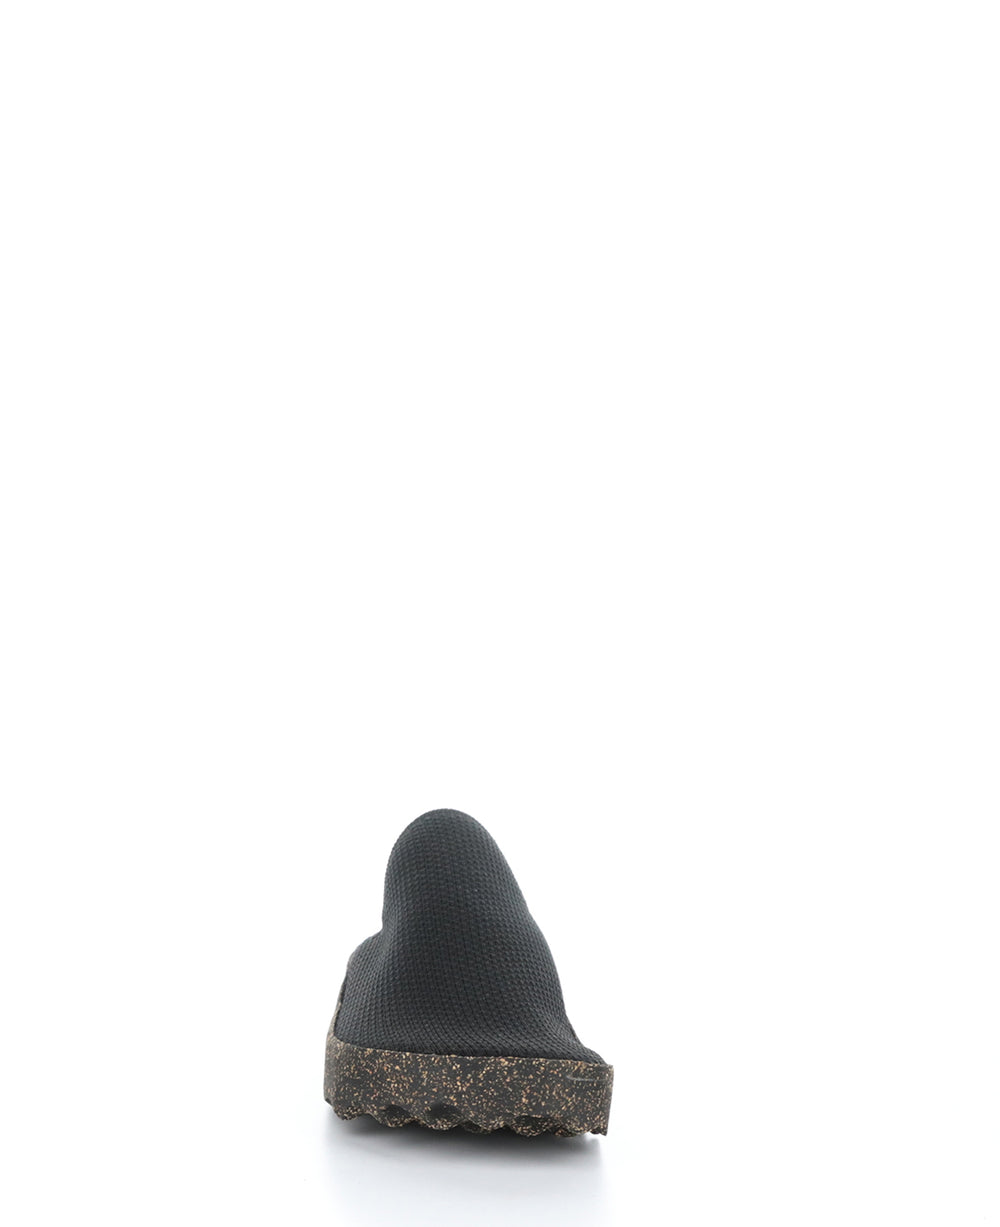 CLOG102ASP BLACK Slip-on Shoes|CLOG102ASP Chaussures à Bout Rond in Noir